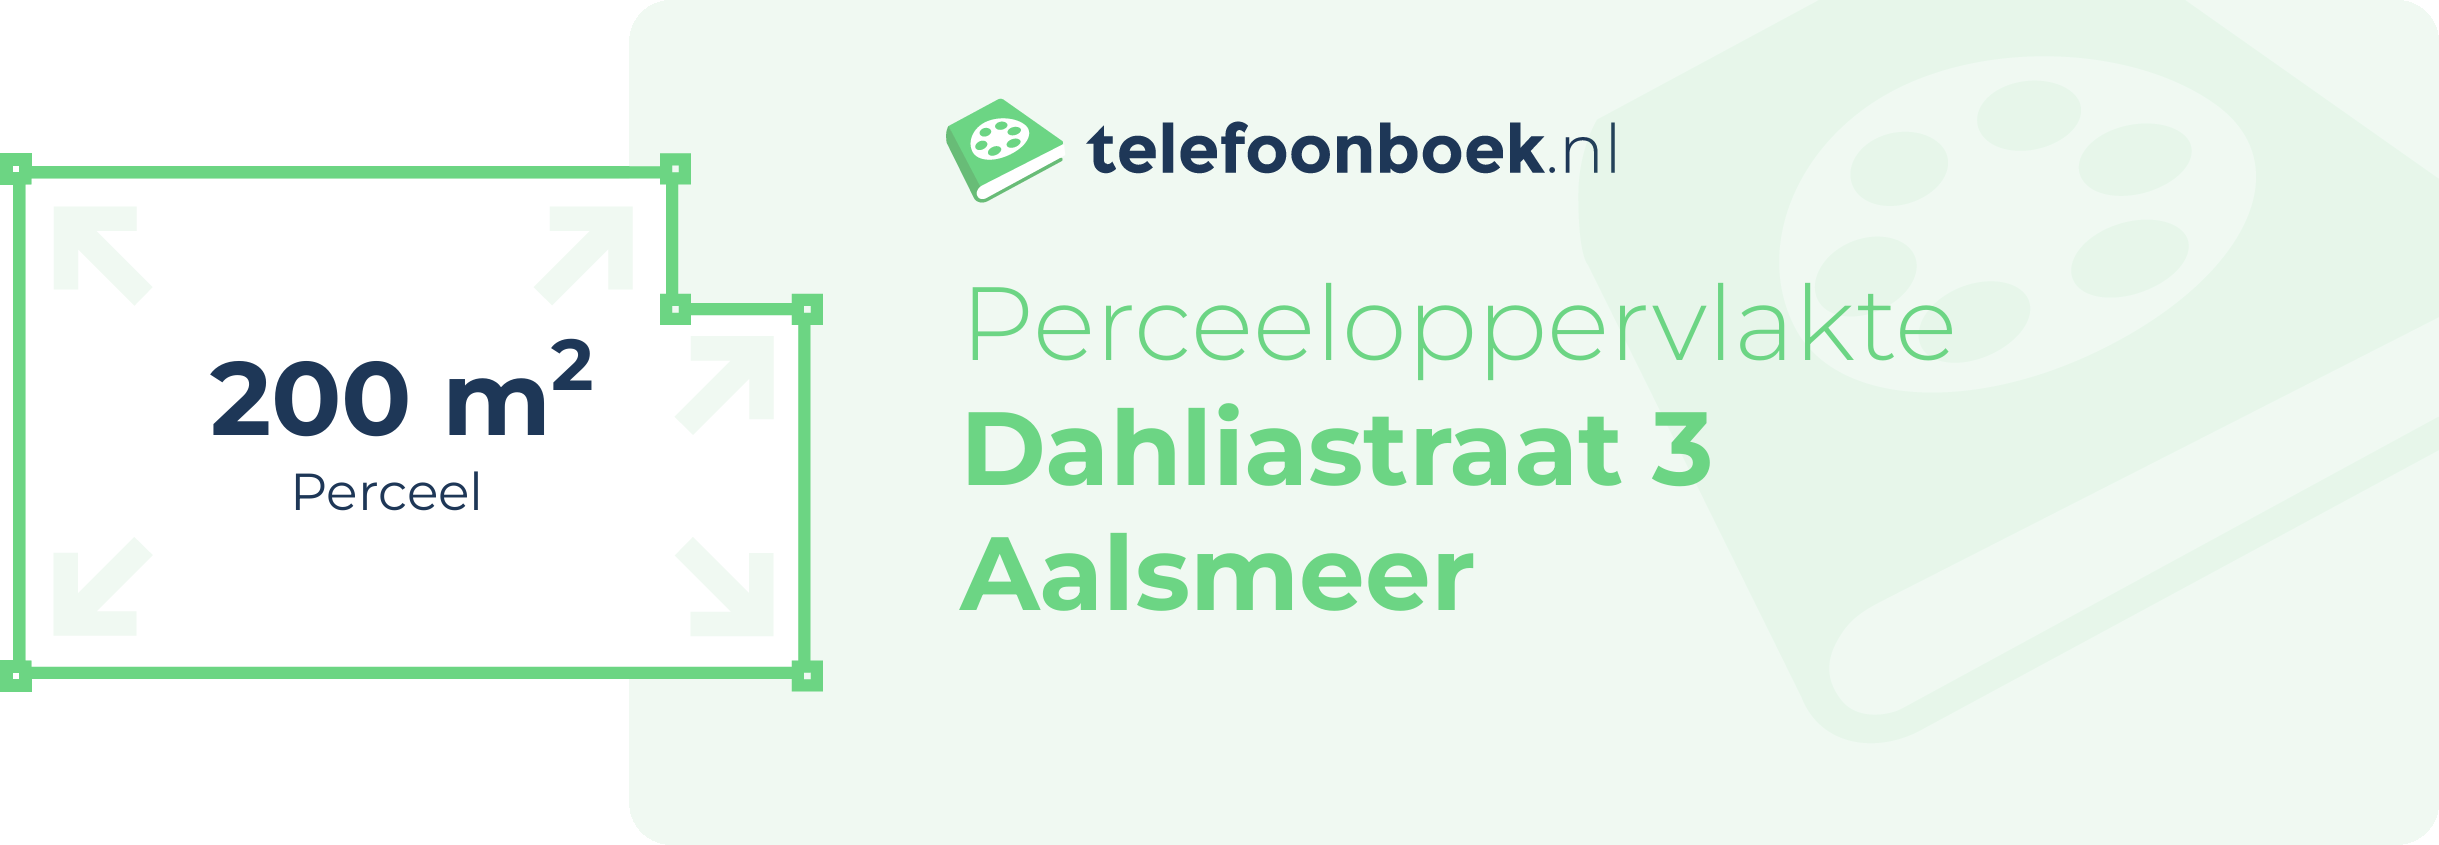 Perceeloppervlakte Dahliastraat 3 Aalsmeer